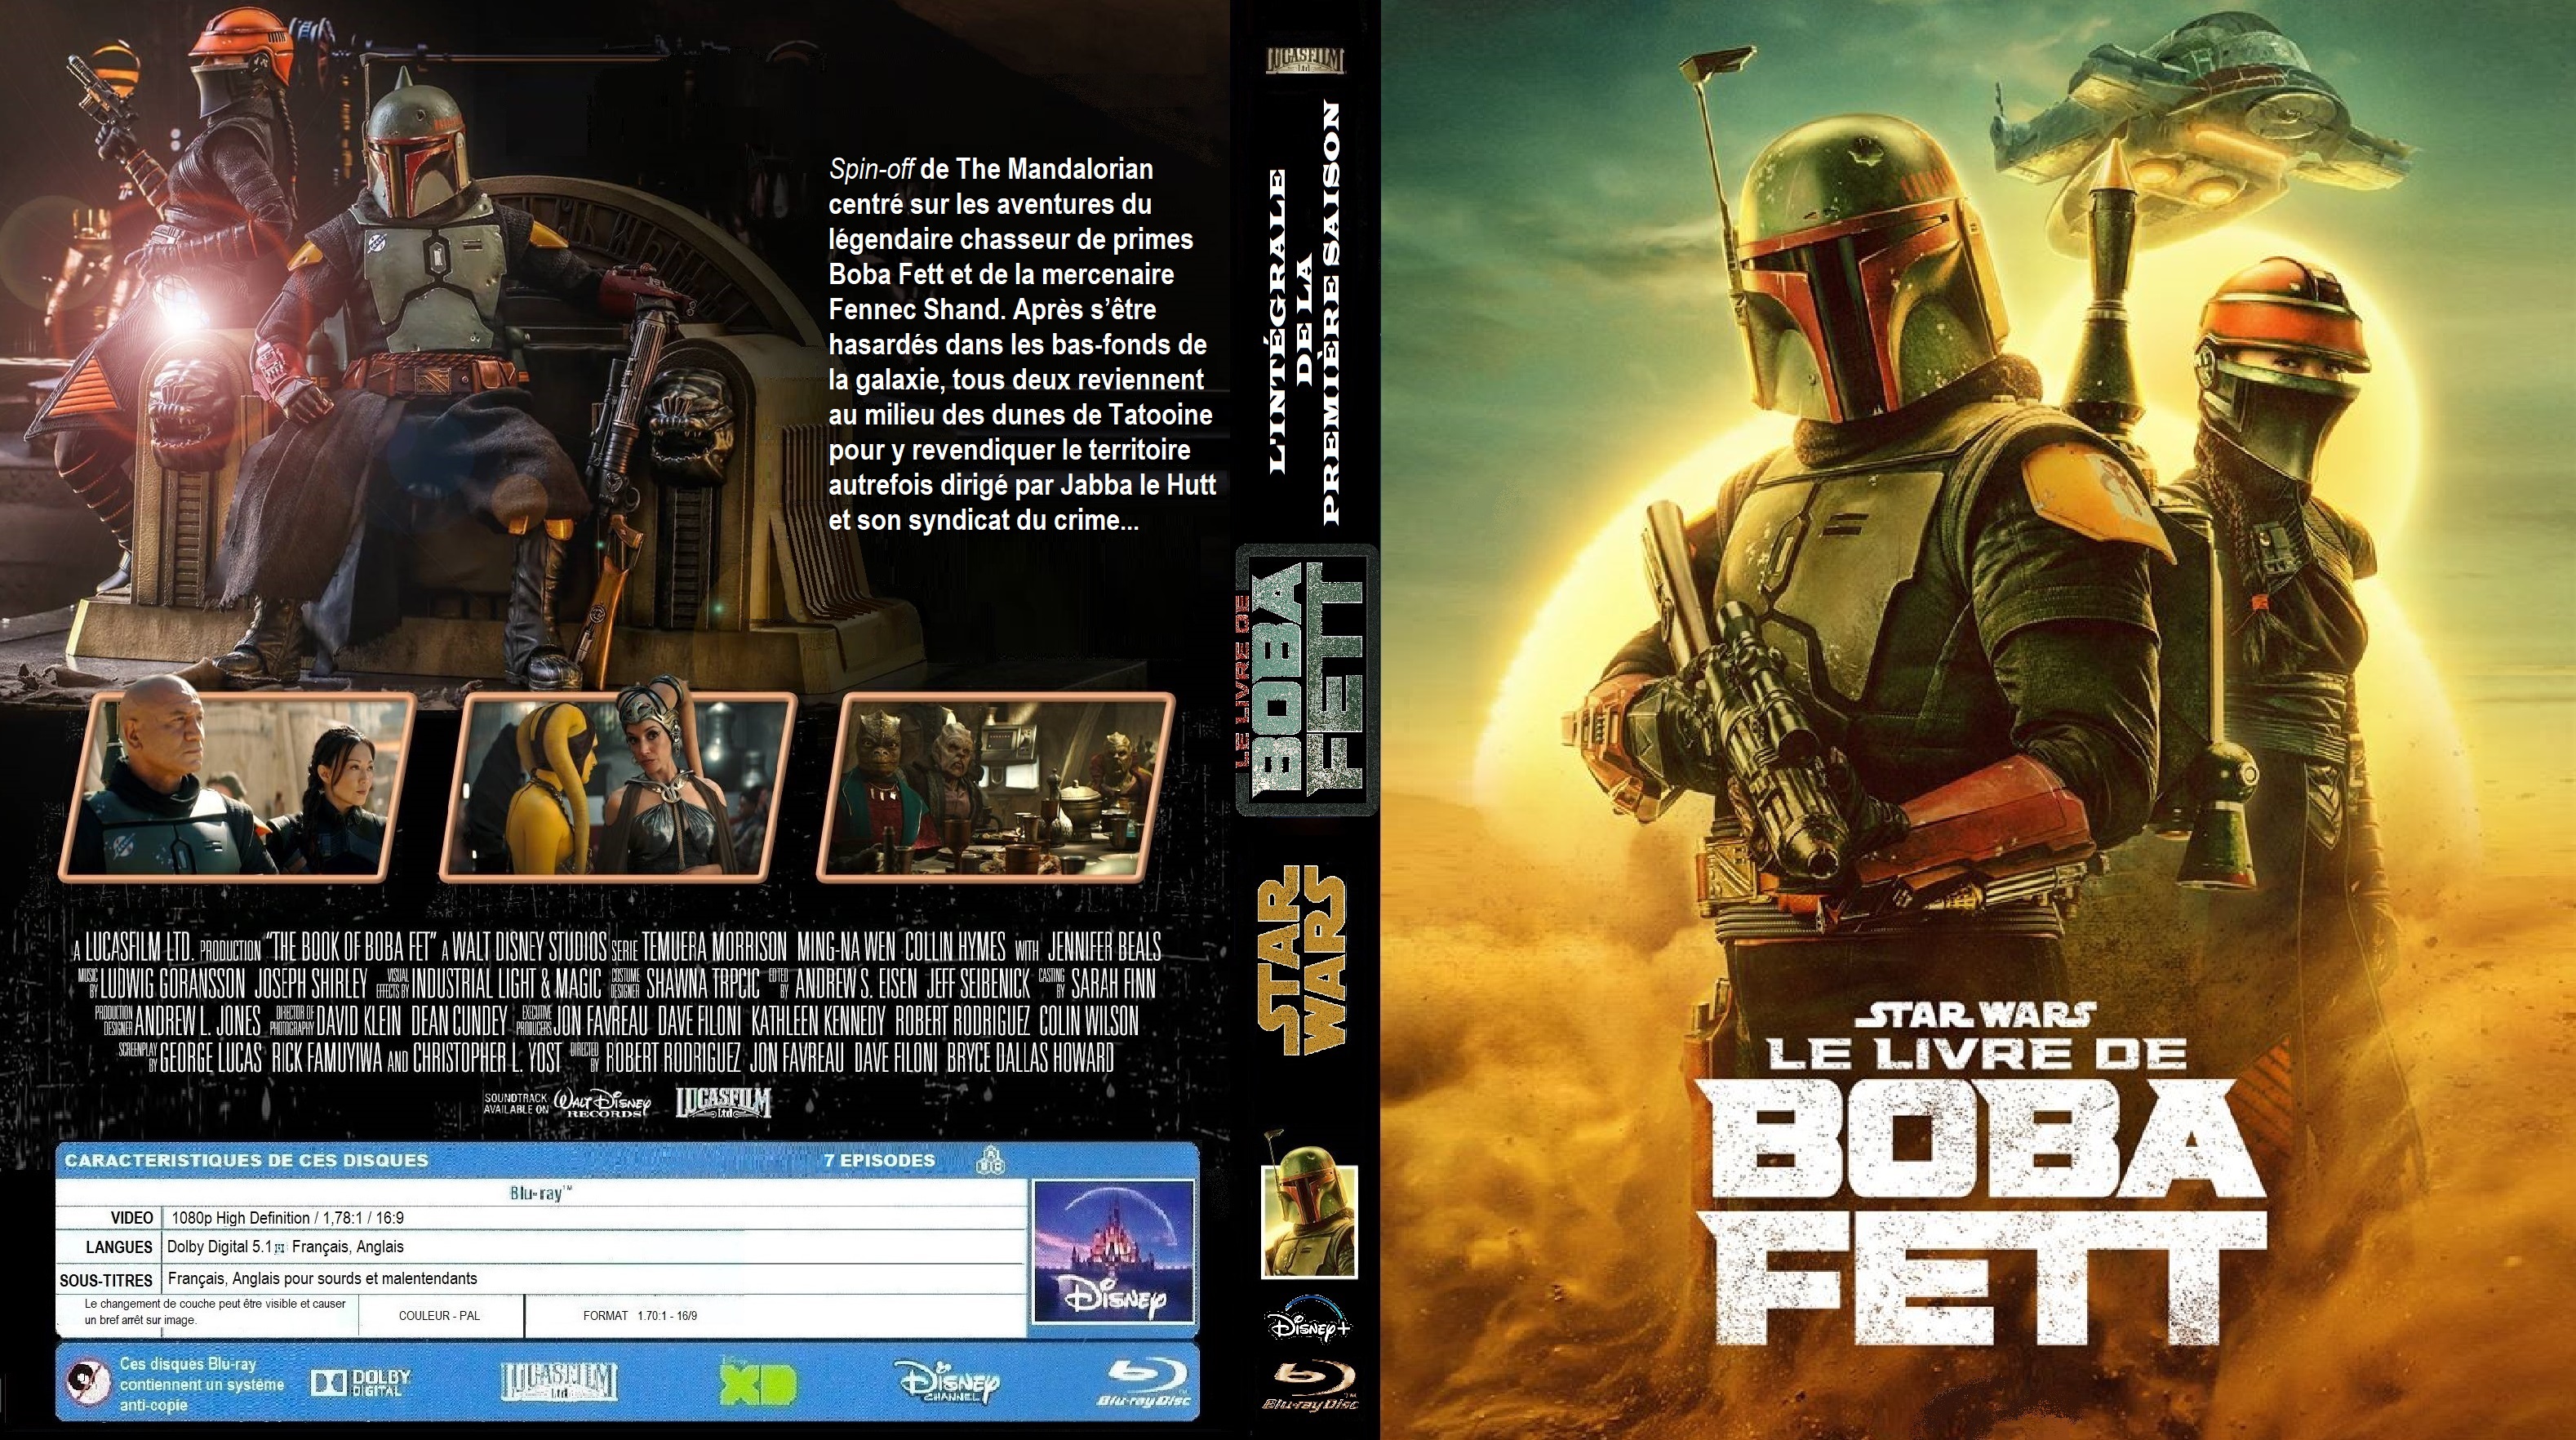 Jaquette DVD Star Wars Le Livre de Boba Fett Saison 1 custom  BLU RAY